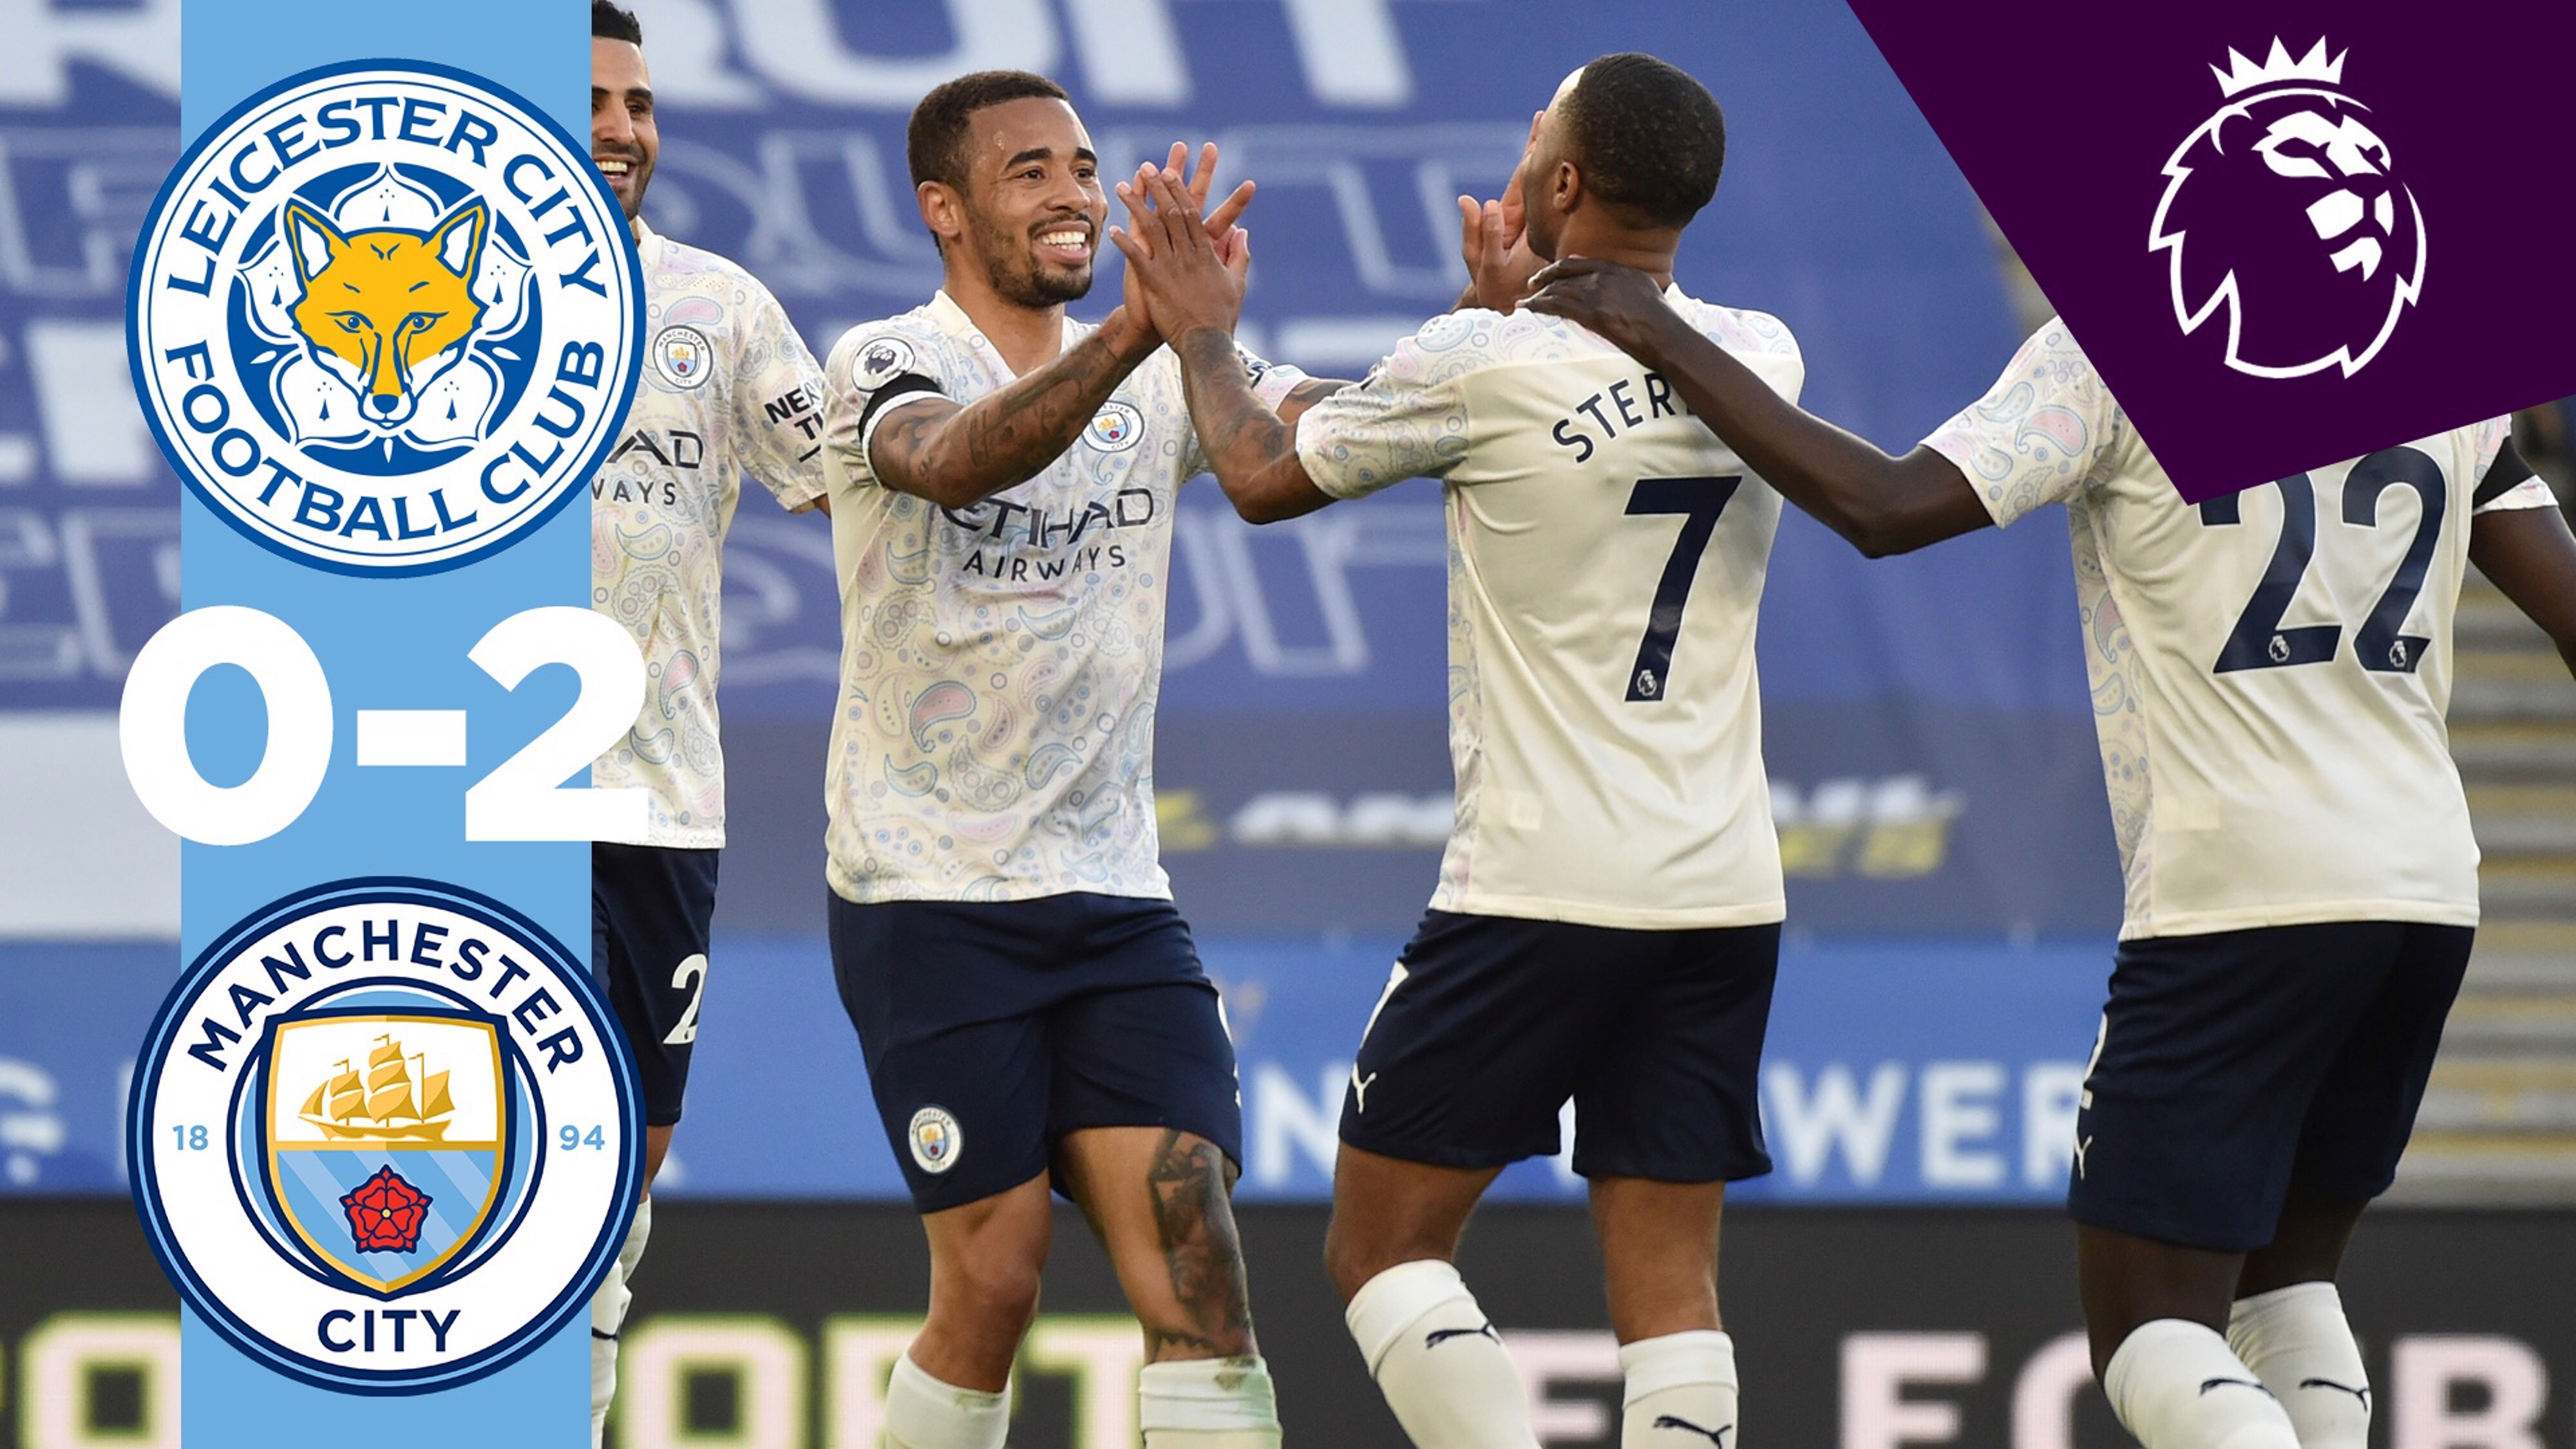 Leicester City: Short highlights